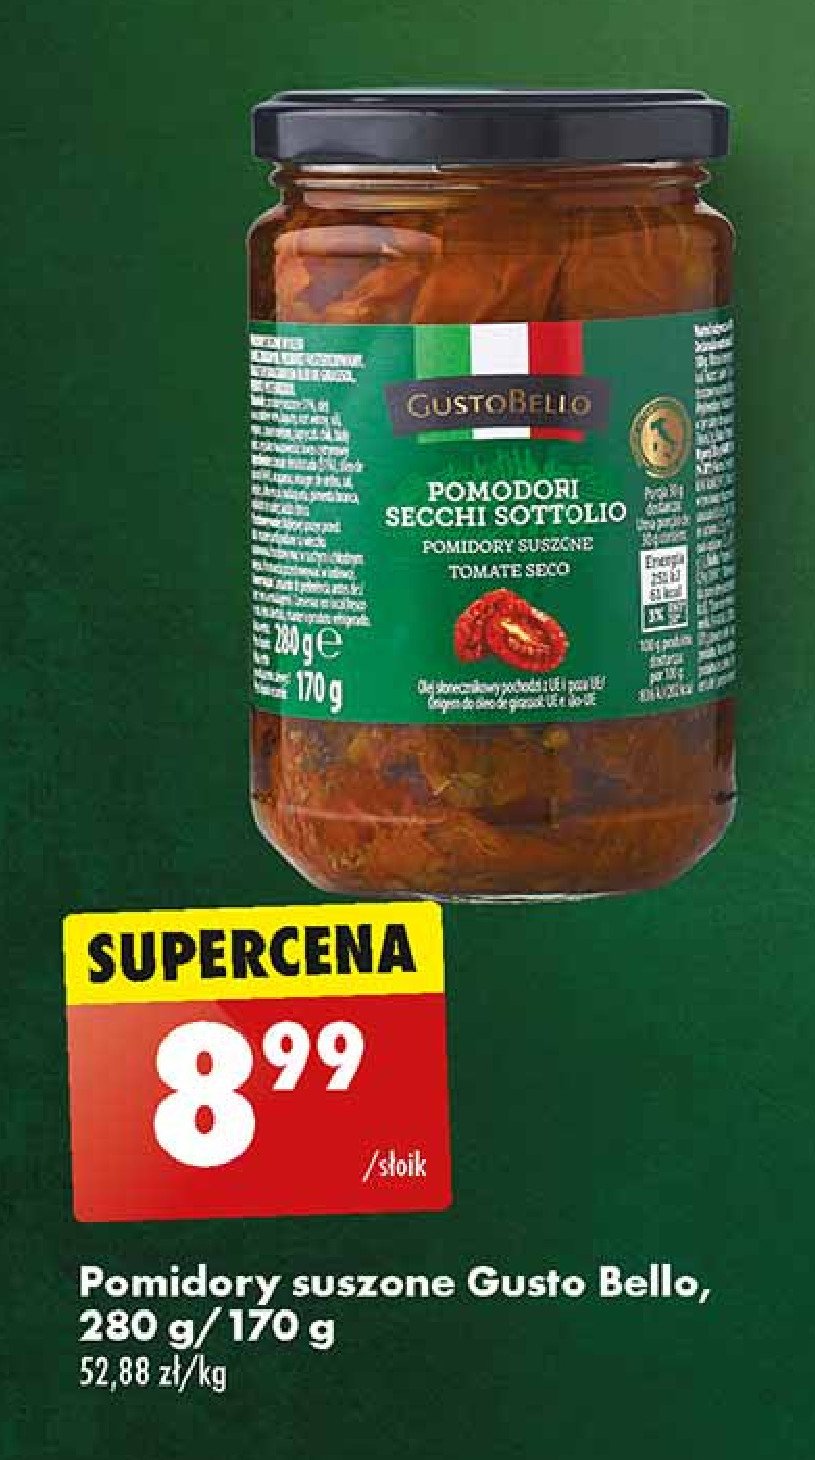 Pomidory suszone Gustobello promocja